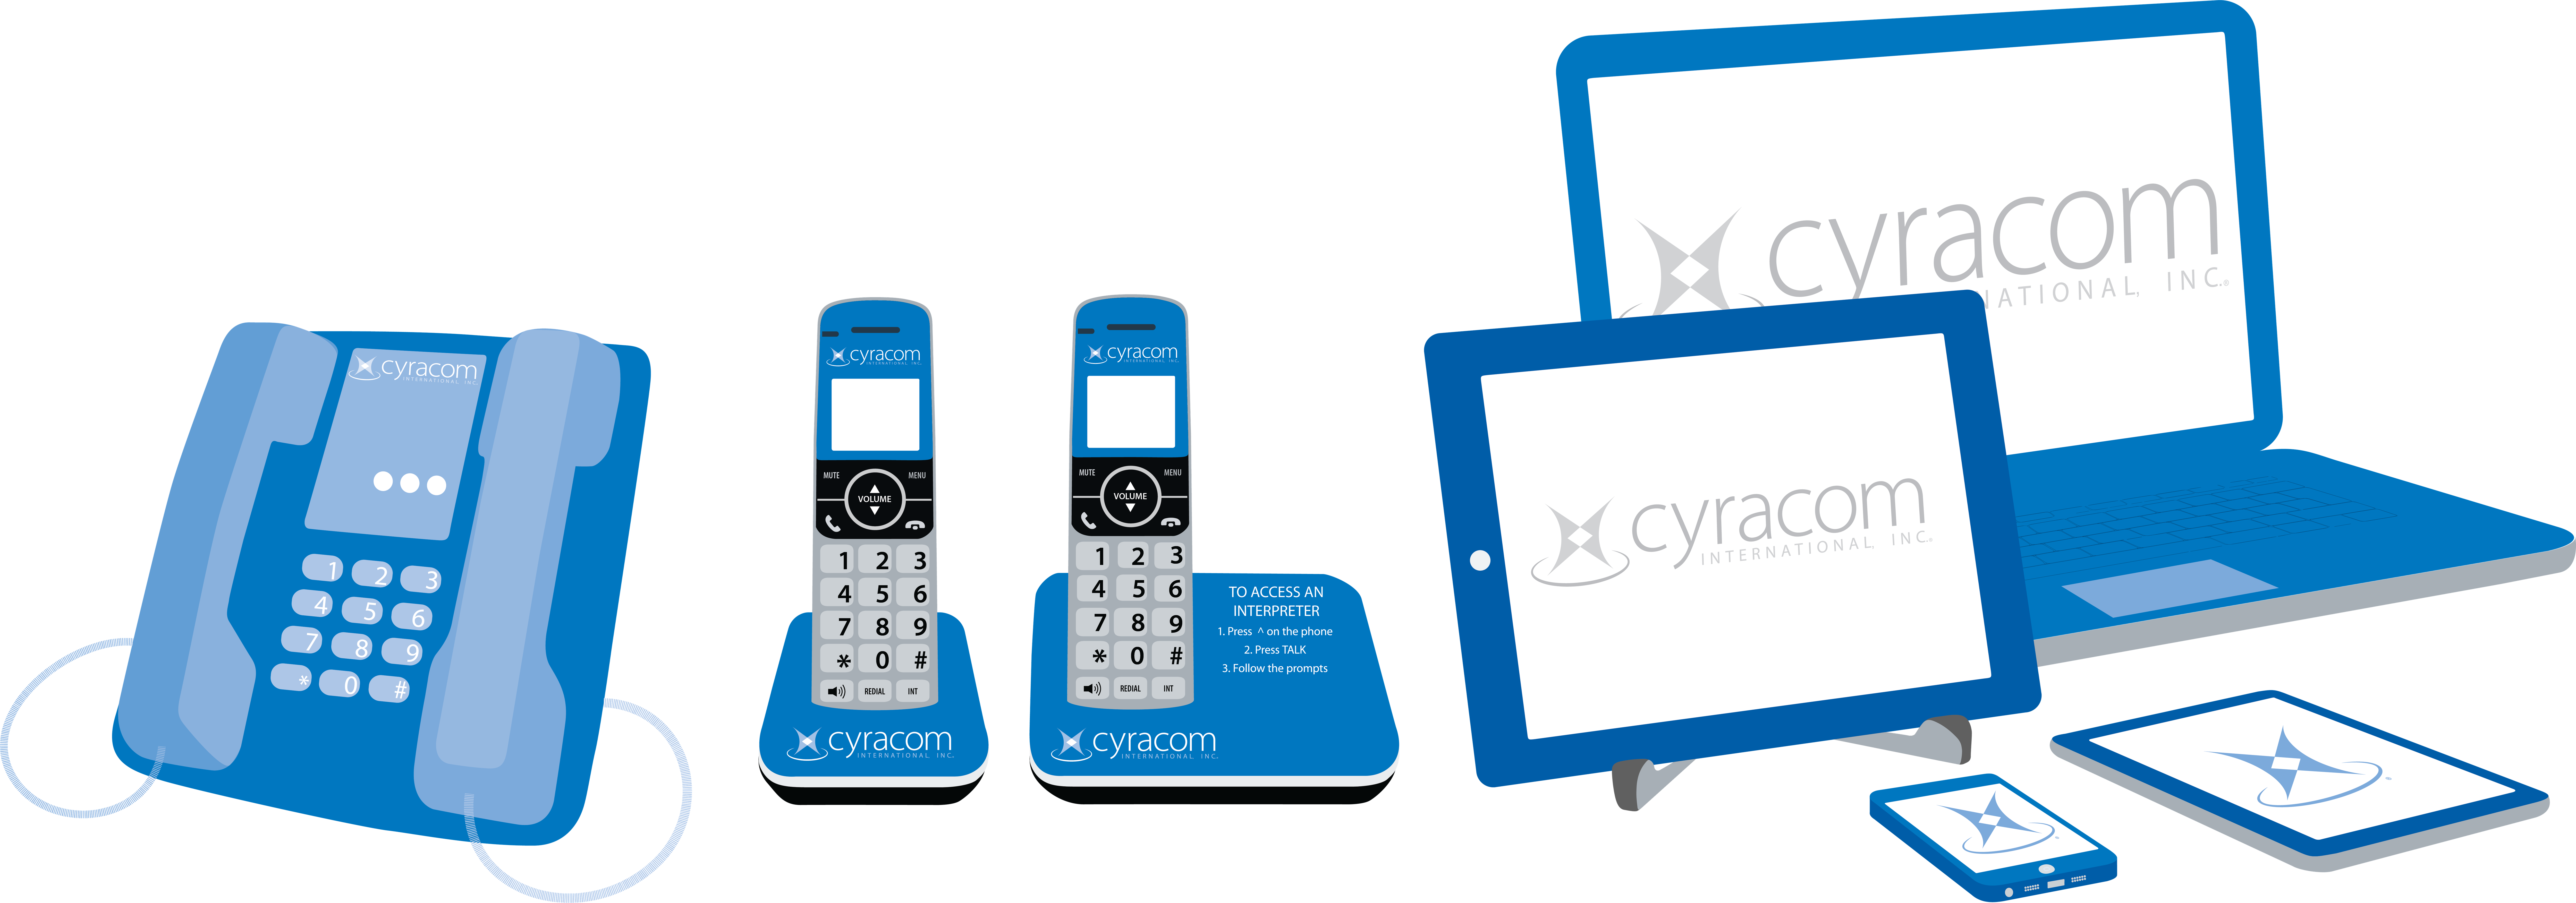 CyraCom Devices (All) - 2020 